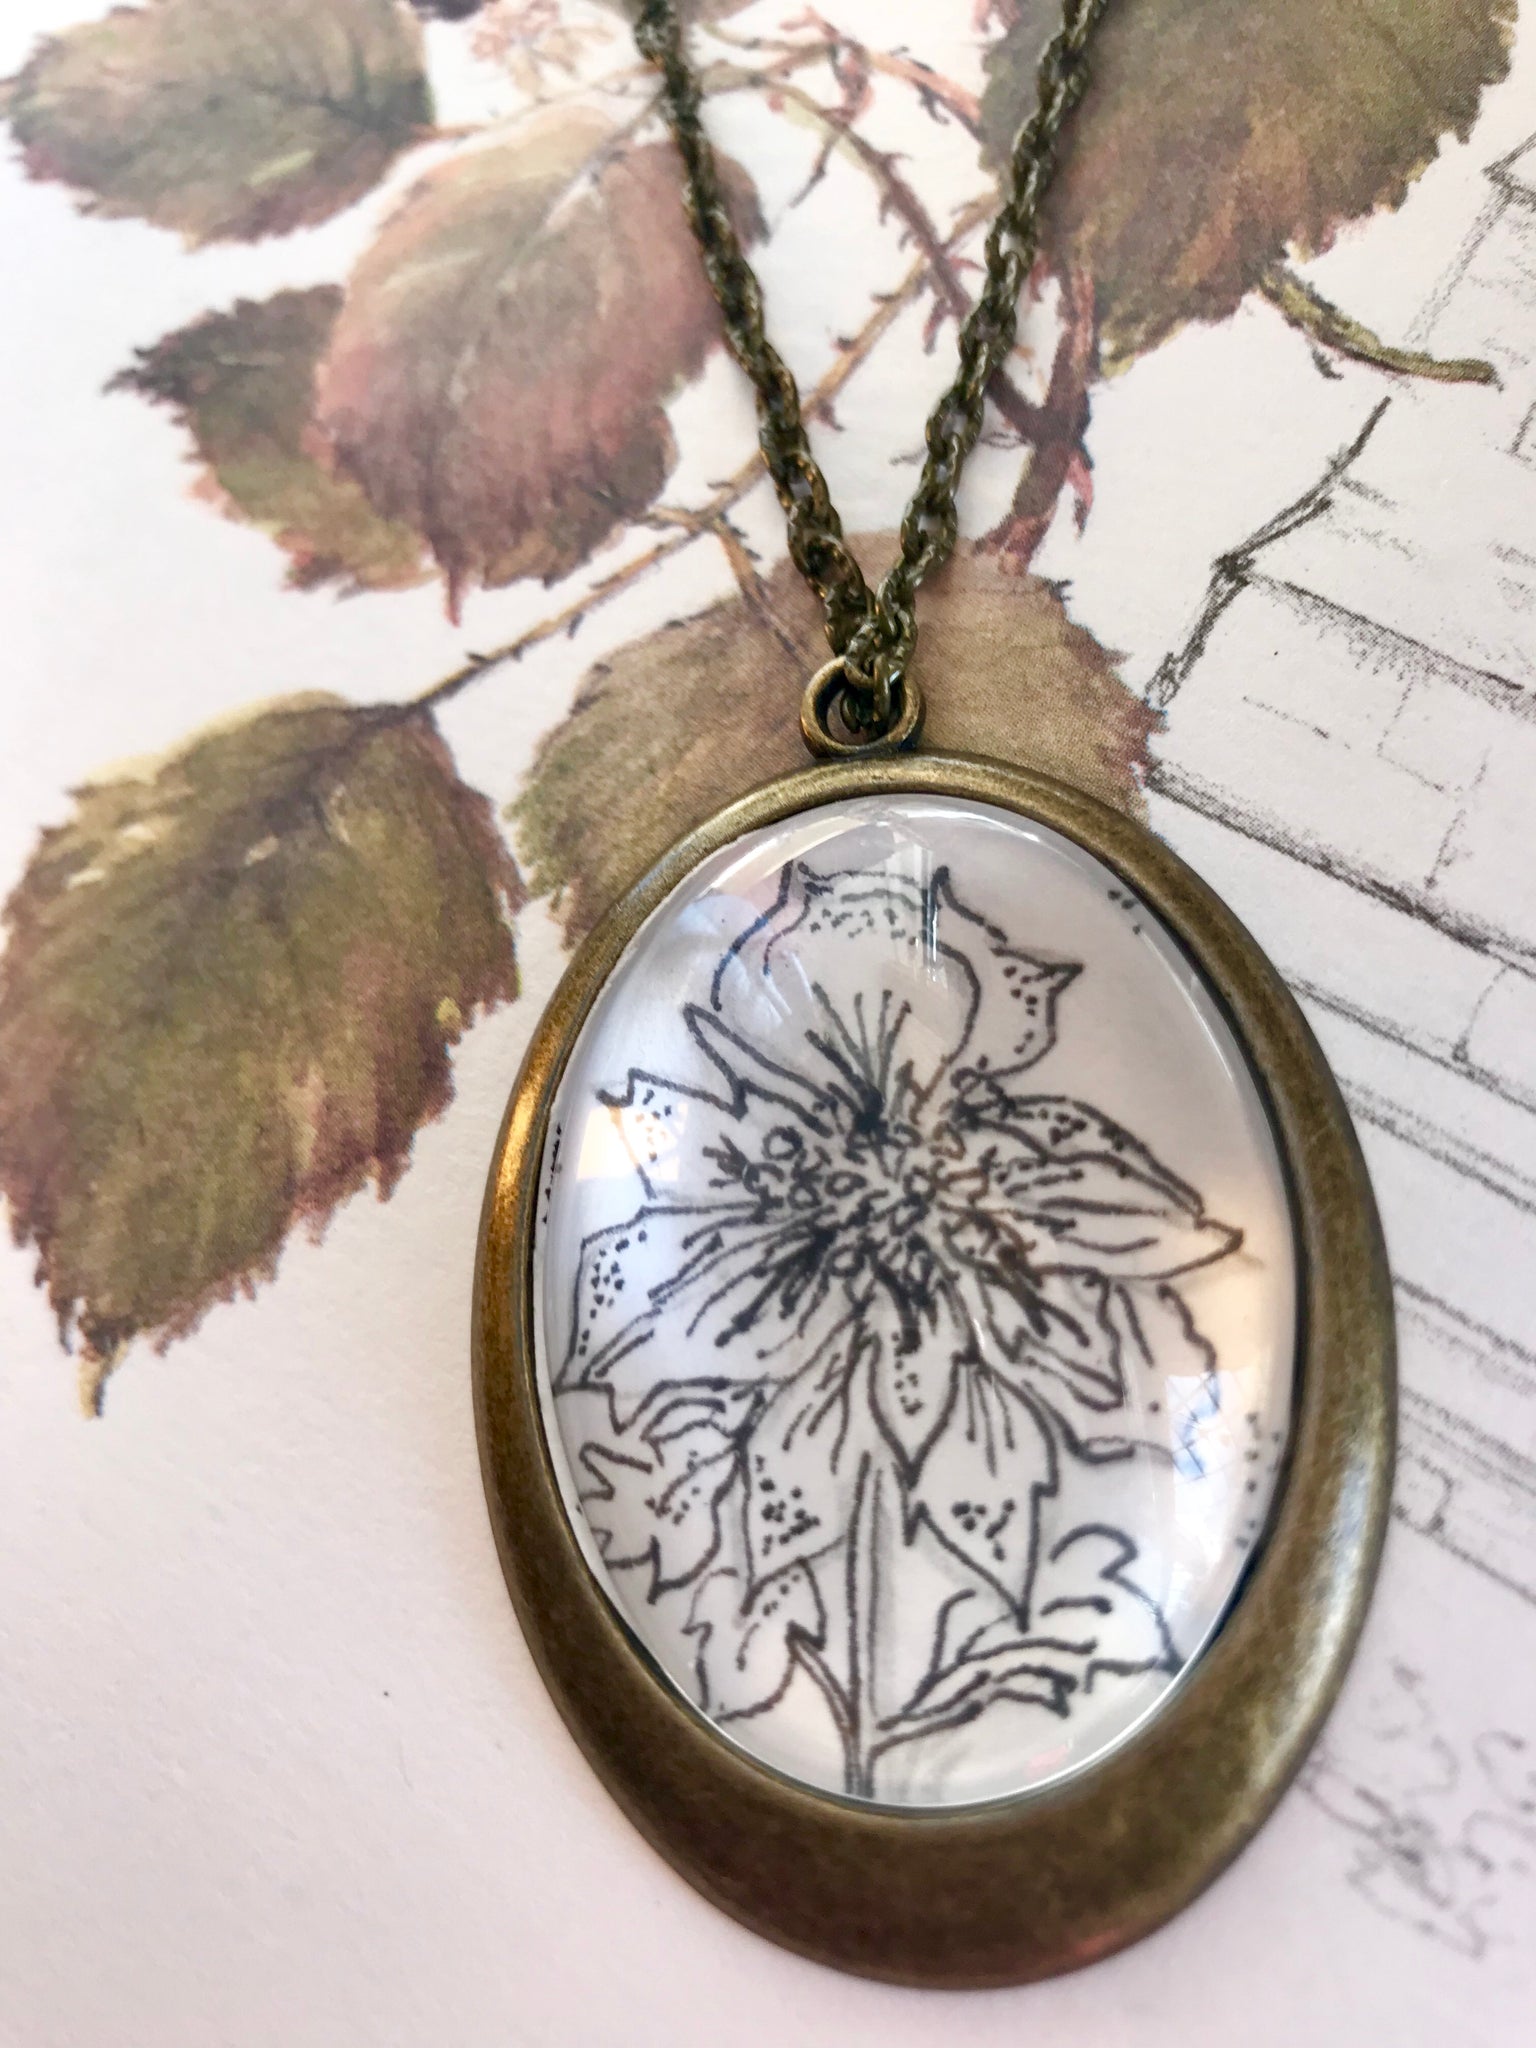 Poinsettia, hand-drawn pendant, birth flower for December